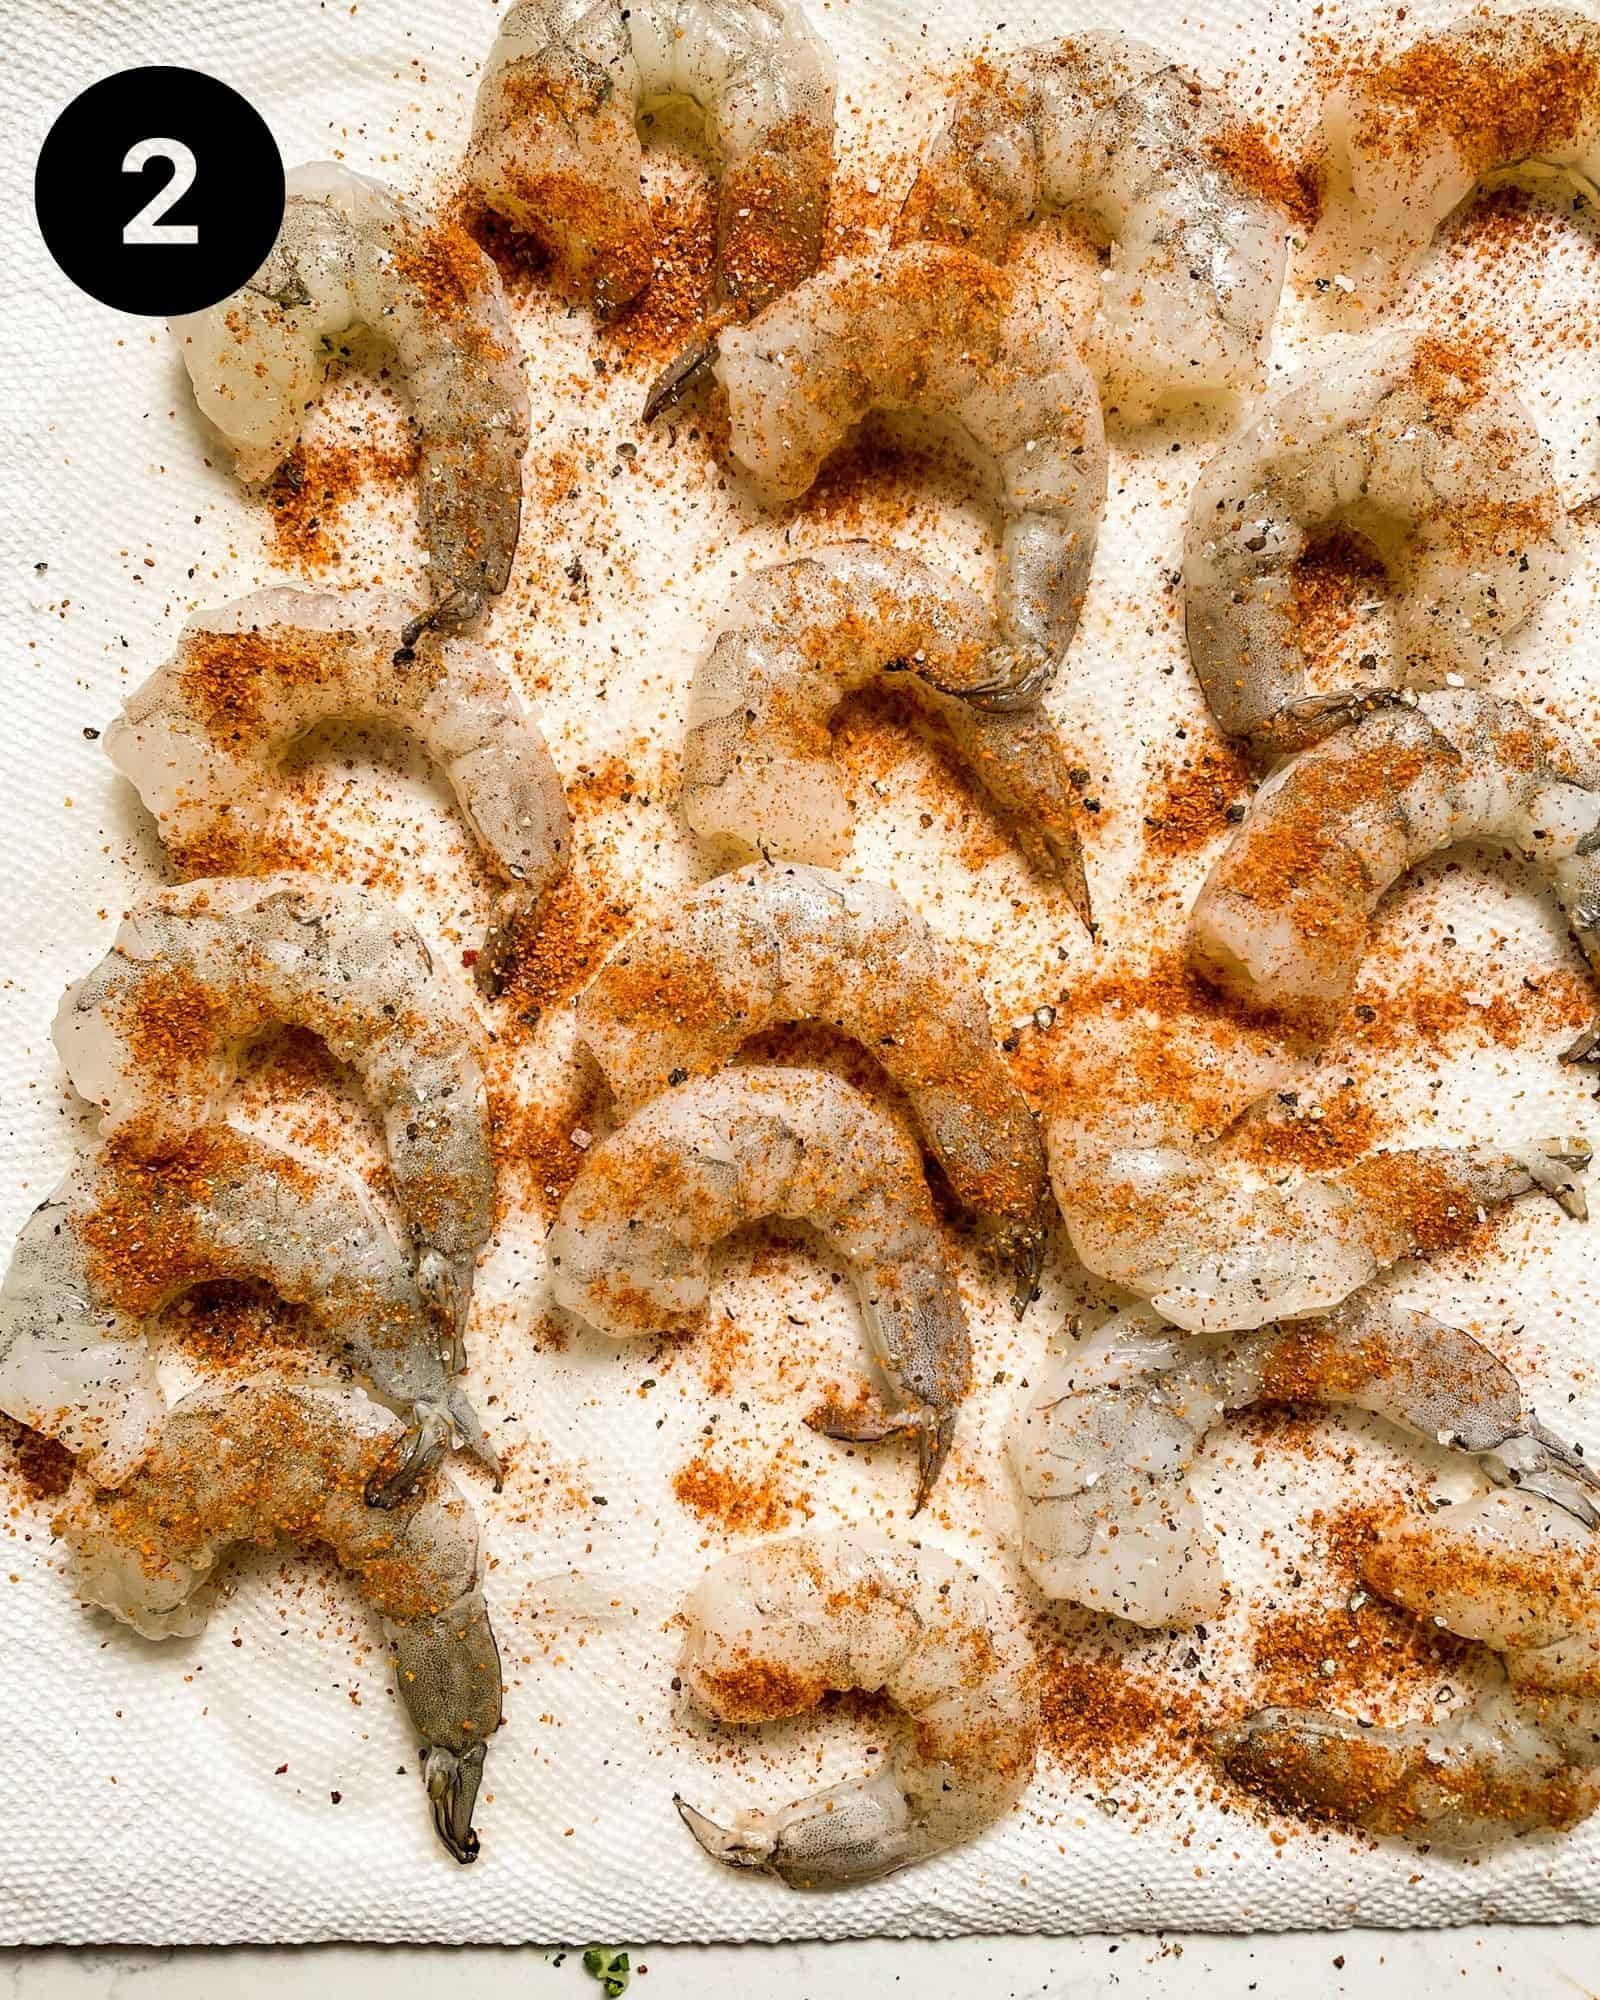 shrimp on a paper towel coated in seasonings, salt, and pepper.